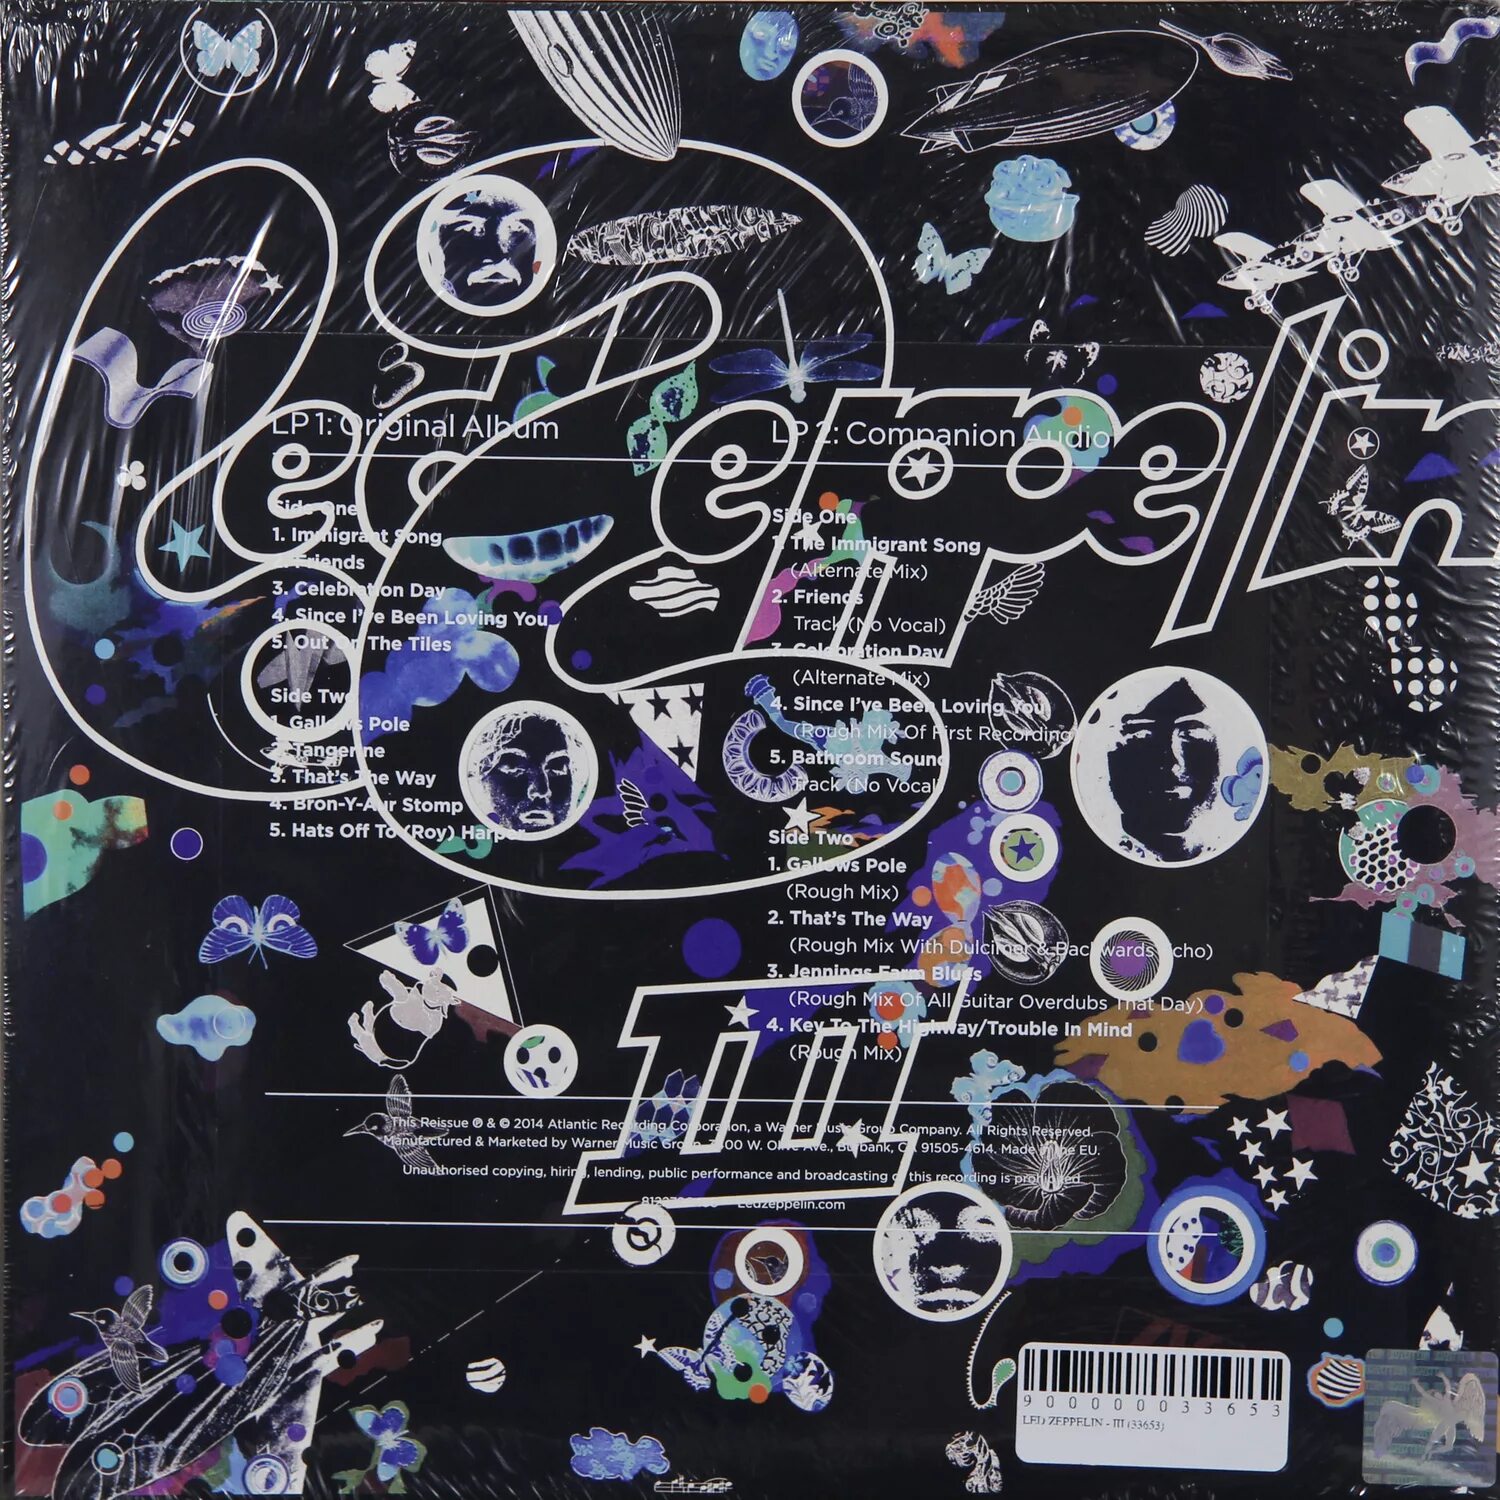 Виниловая пластинка led Zeppelin, led Zeppelin III (Deluxe , Remastered) (0081227964368). Led Zeppelin 3 LP. Led Zeppelin 3 обложка альбома. Led Zeppelin 3 винил. Led zeppelin iii led zeppelin